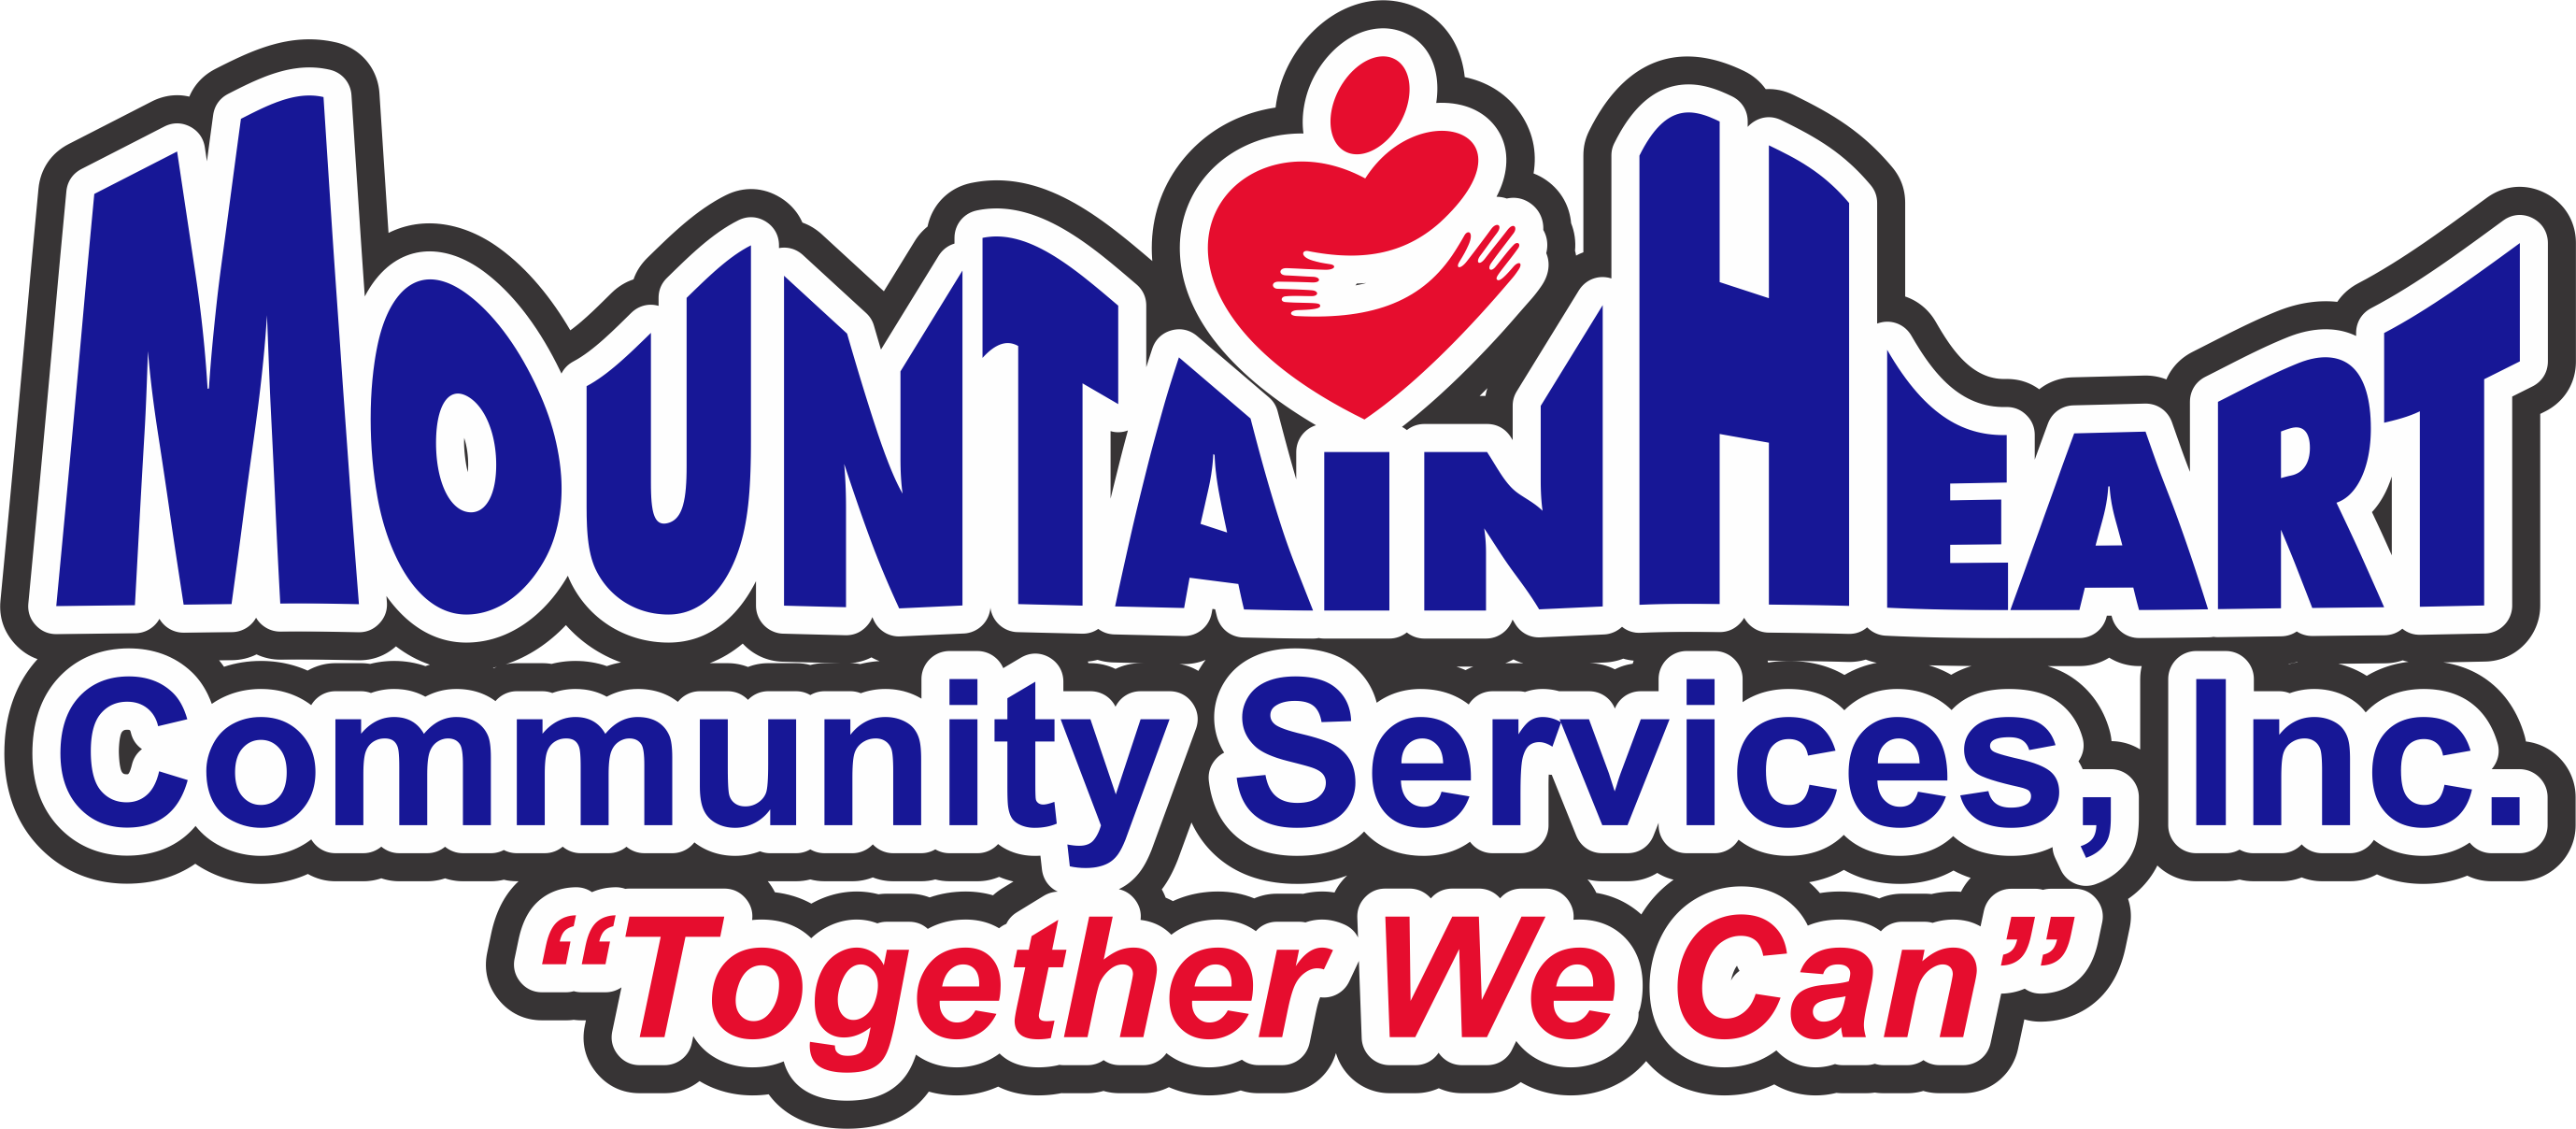 MountainHeart Community Services, Inc. Logo 2017 Double Outline